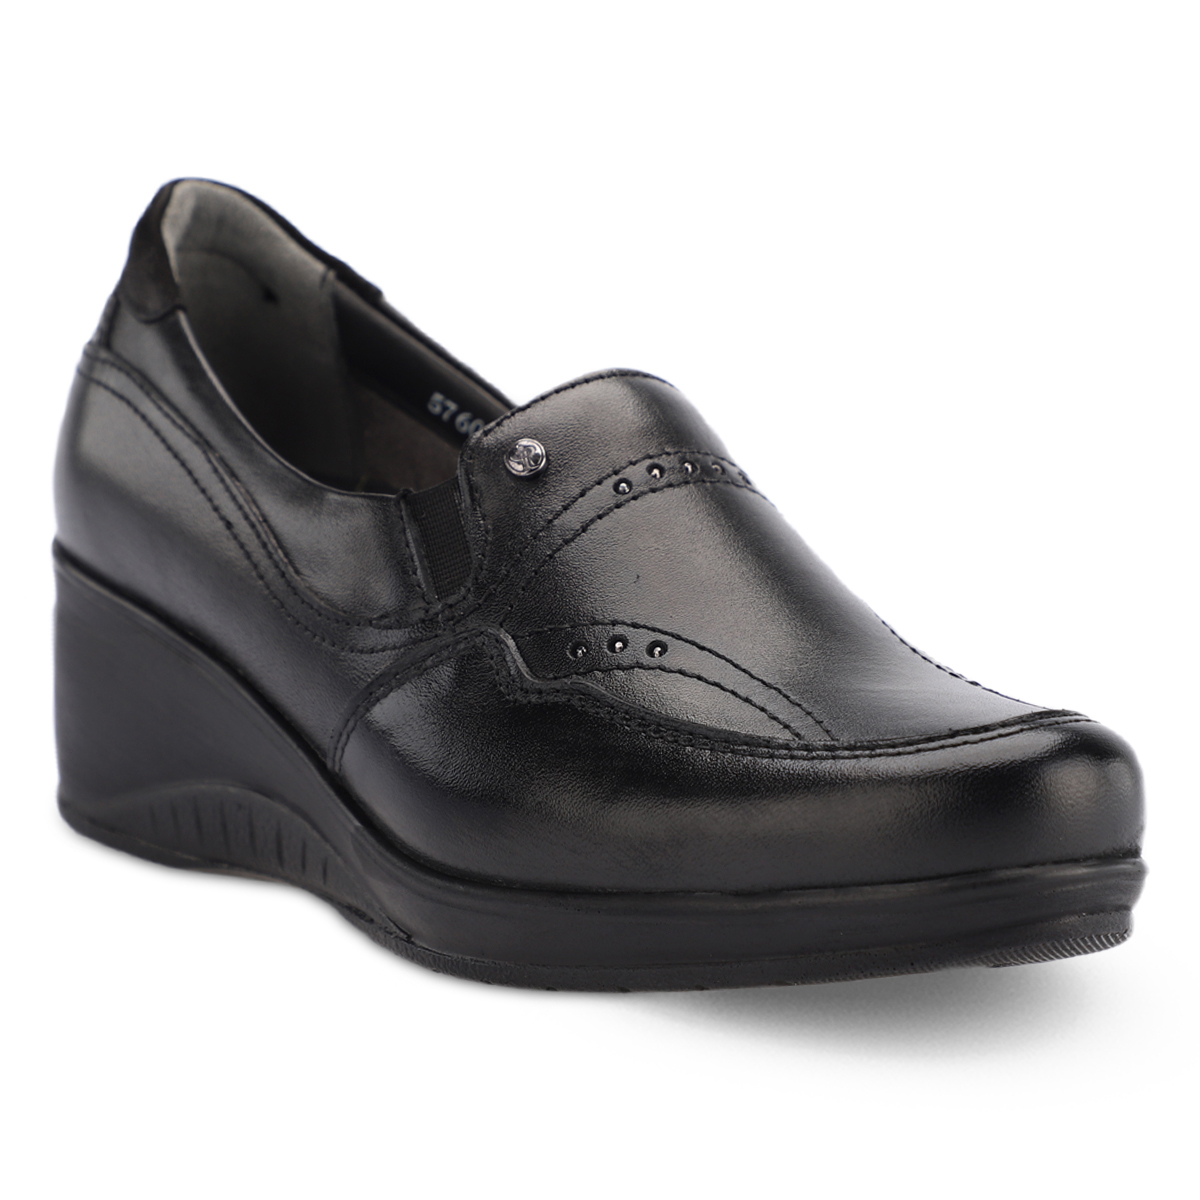 Forelli - Forelli VIOLET-G Comfort Kadın Ayakkabı Siyah